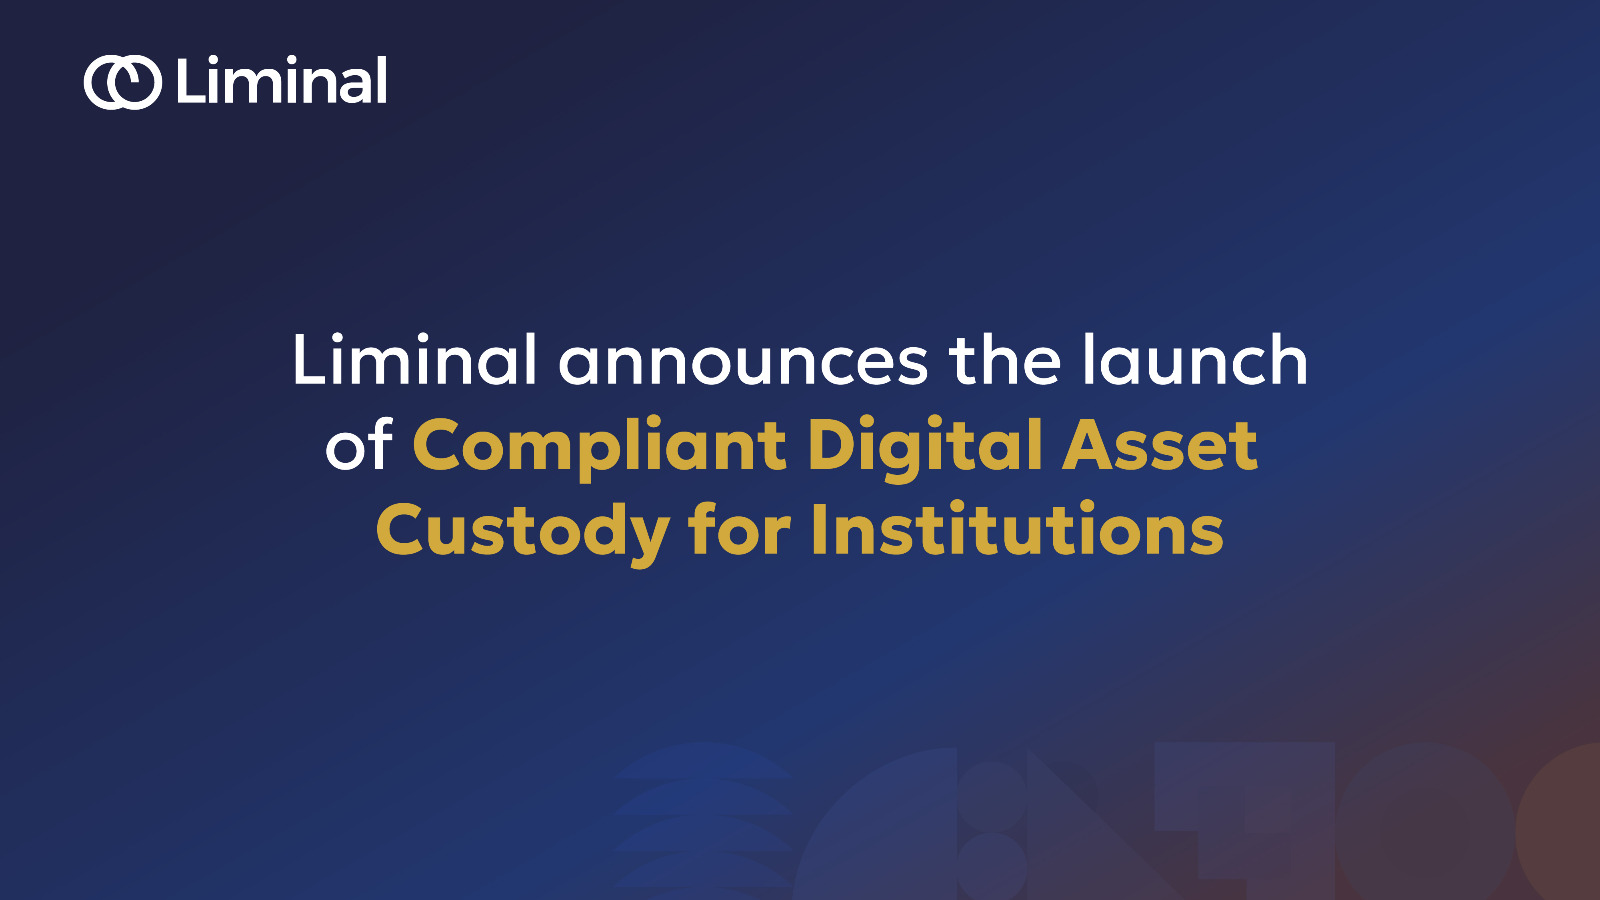 Meeting Institutional Demand, Liminal Launches Compliant Digital Asset Custody Offering